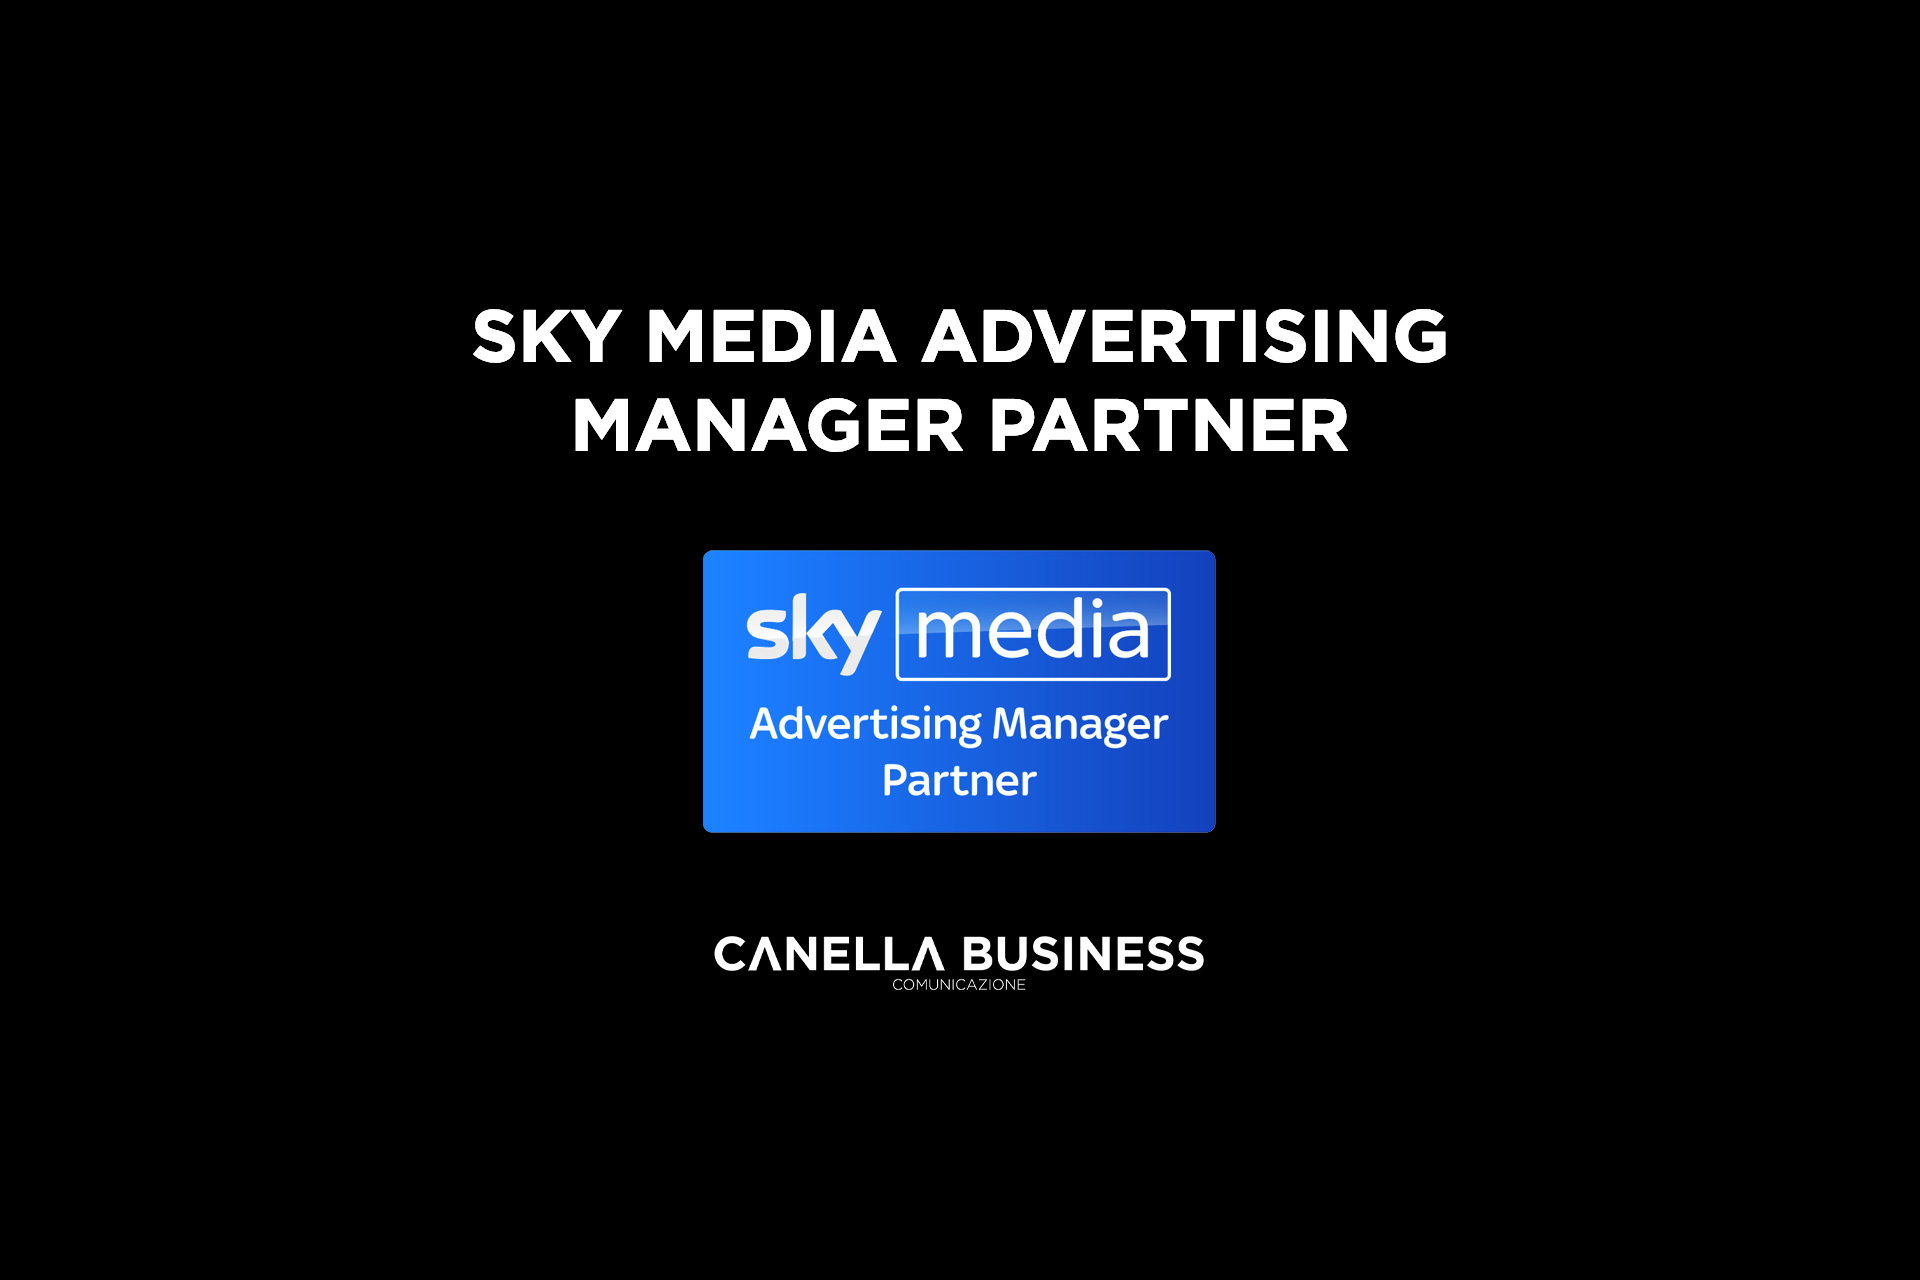 Sky Media Advertising Manager Partner